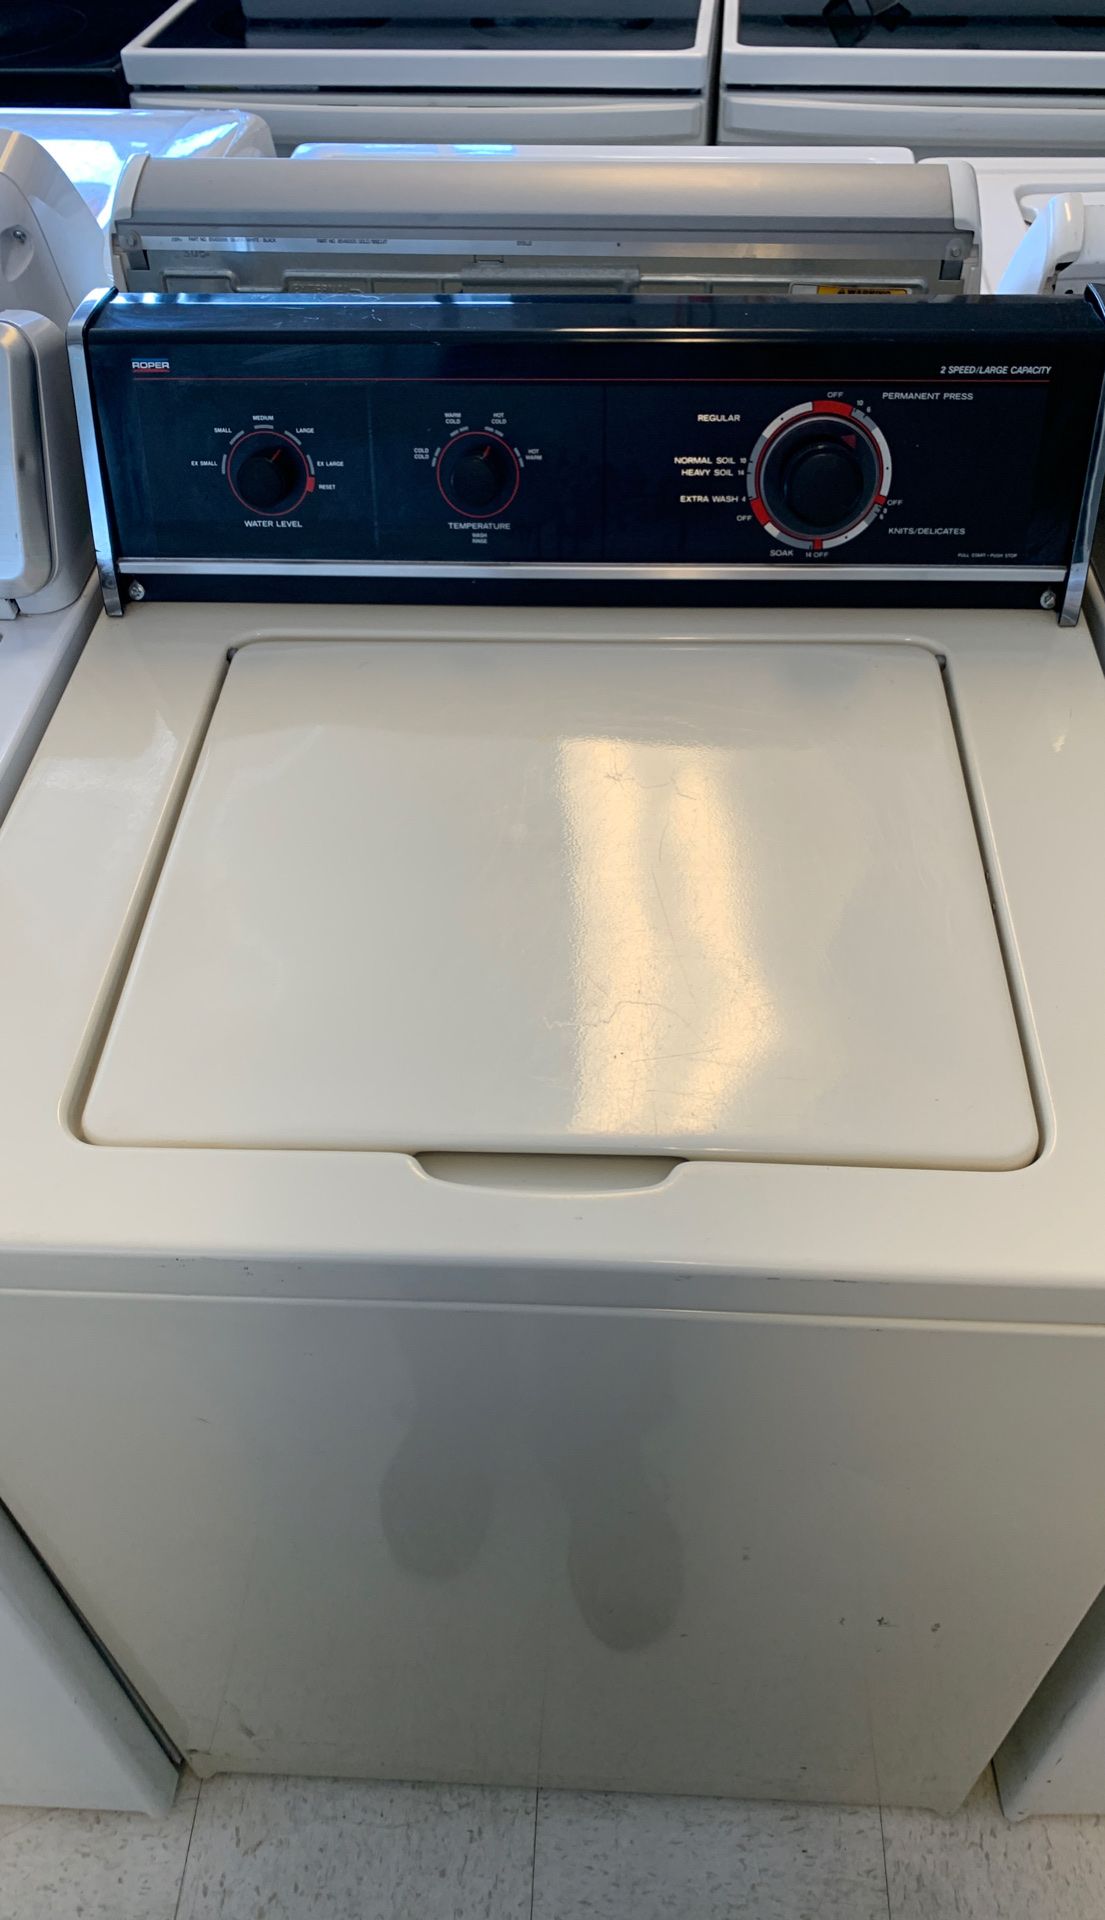 Older Style Whirlpool Washing Machine 90 DAY WARRANTY